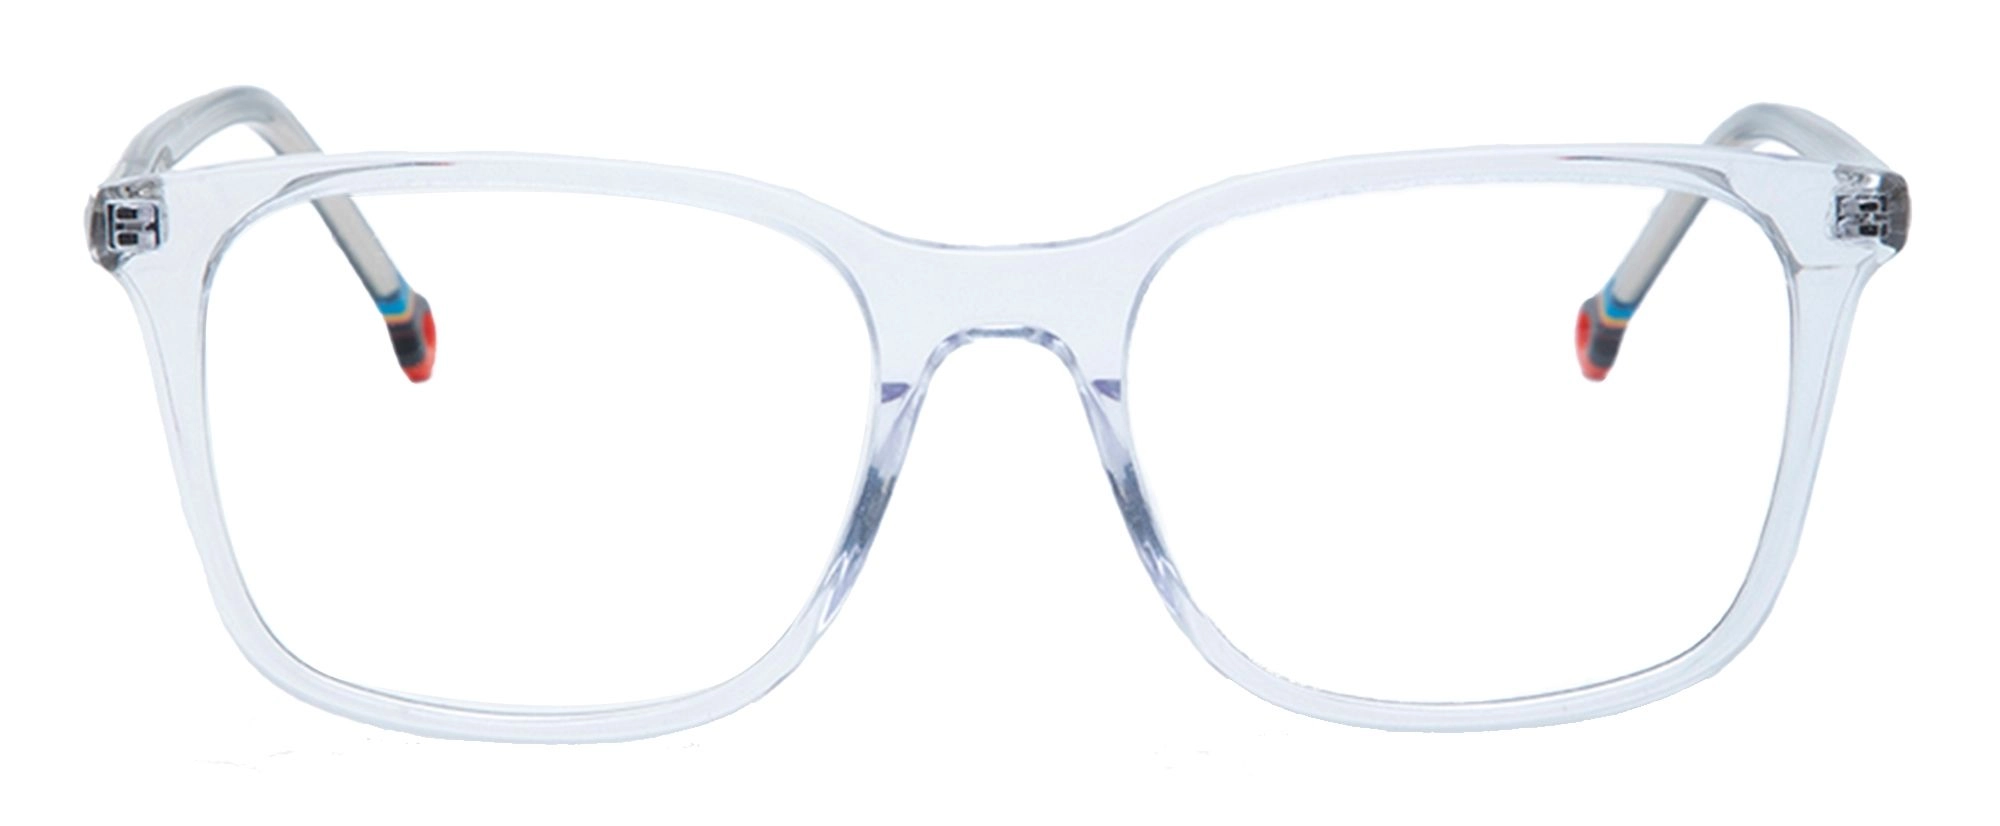 Transparent Square Shaped Acetate Eyeglasses Frames for Men & Women